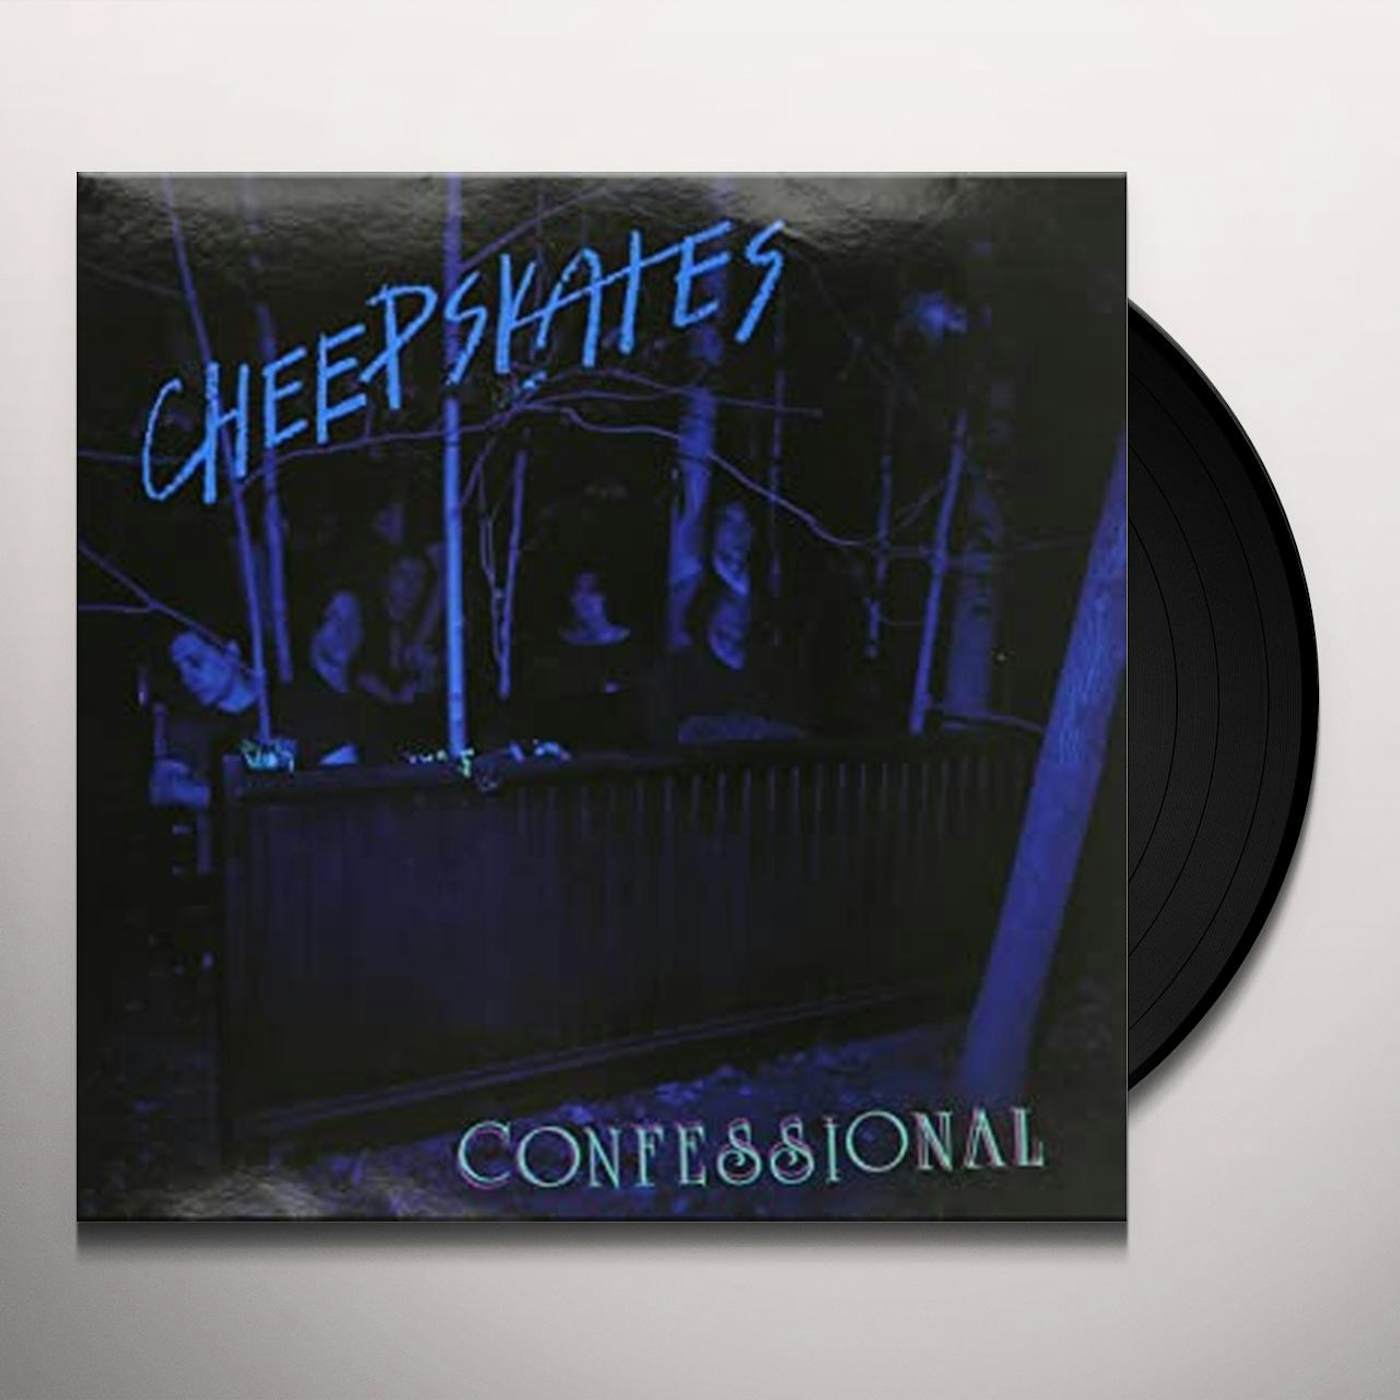 Cheepskates CONFESSIONAL (Vinyl)